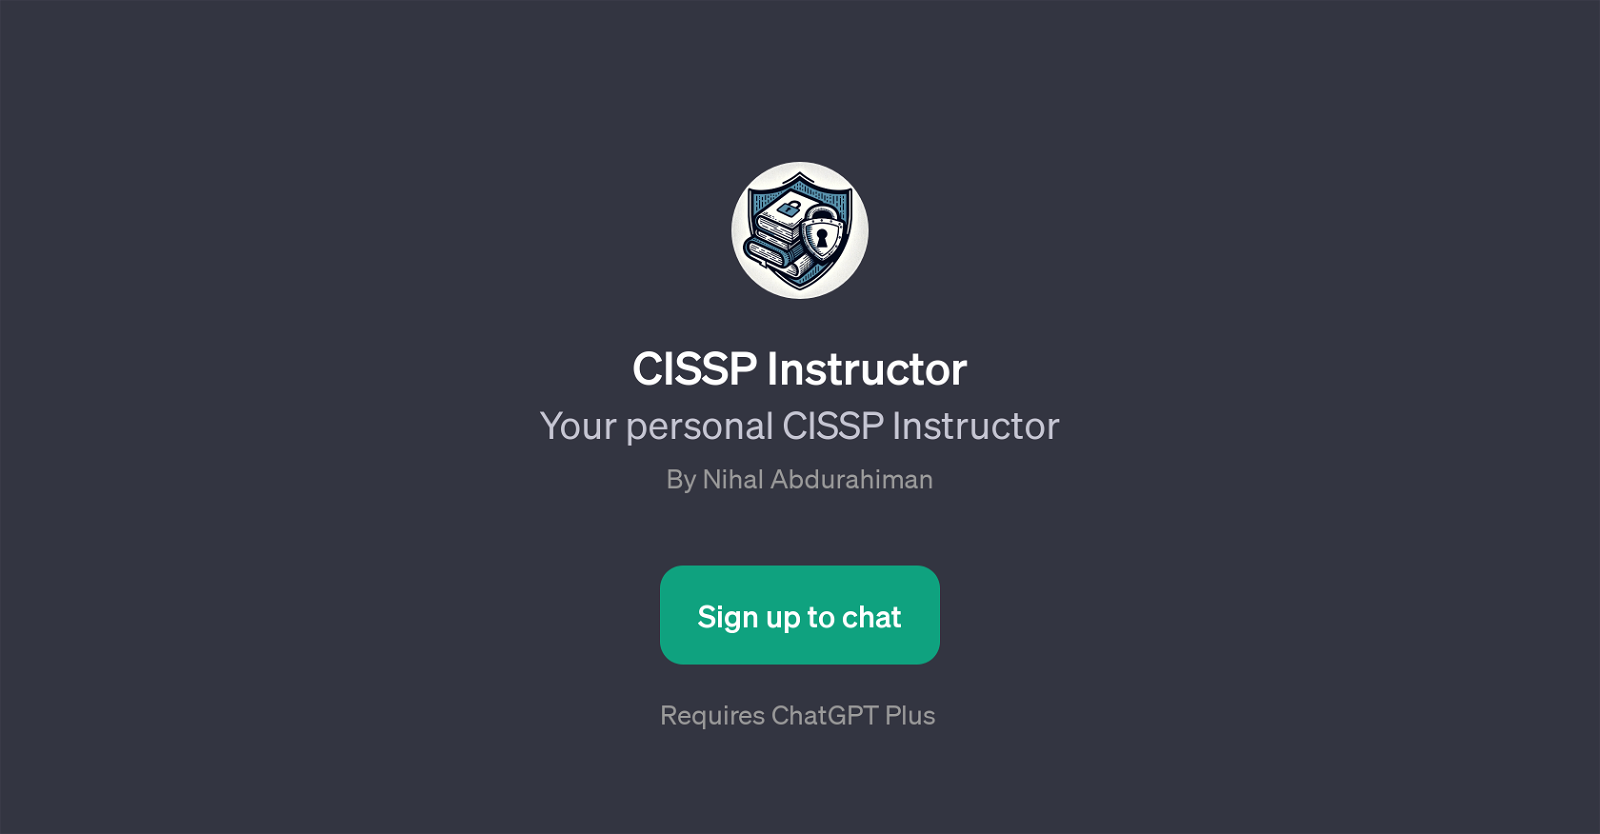 CISSP Instructor website